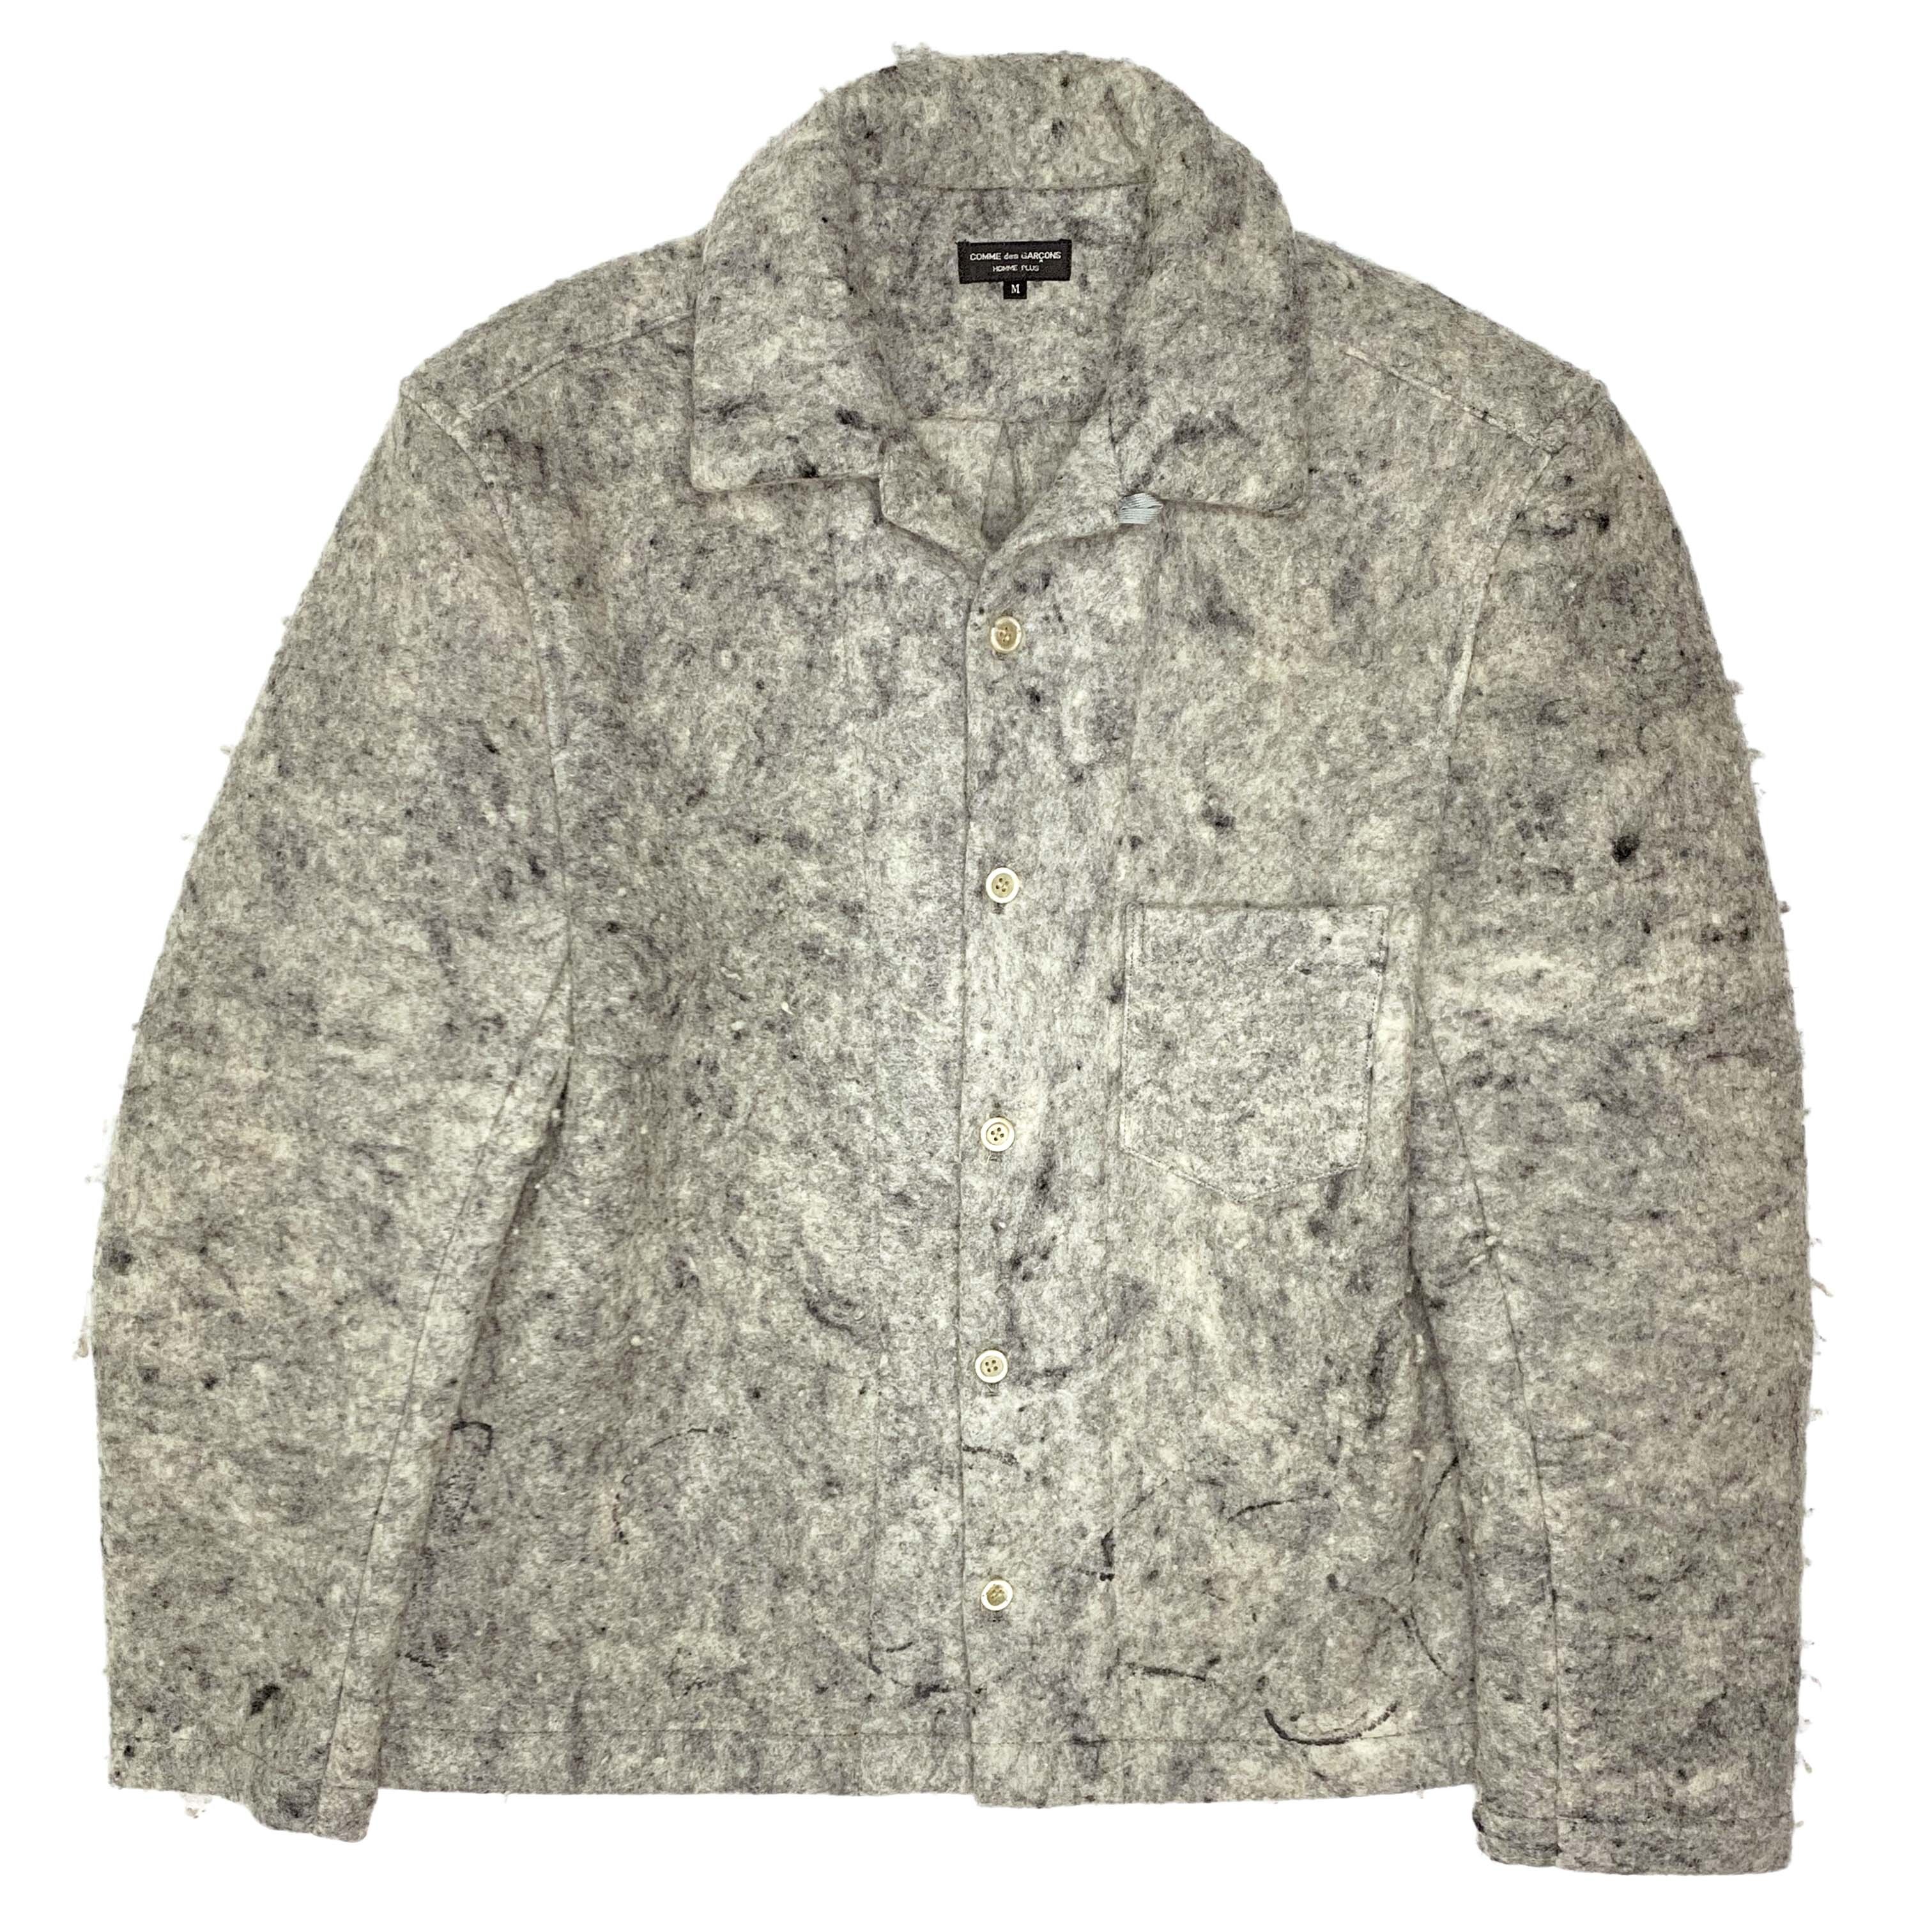 AW95 Numbered Oversized Pressed Wool Felt Jacket - 2